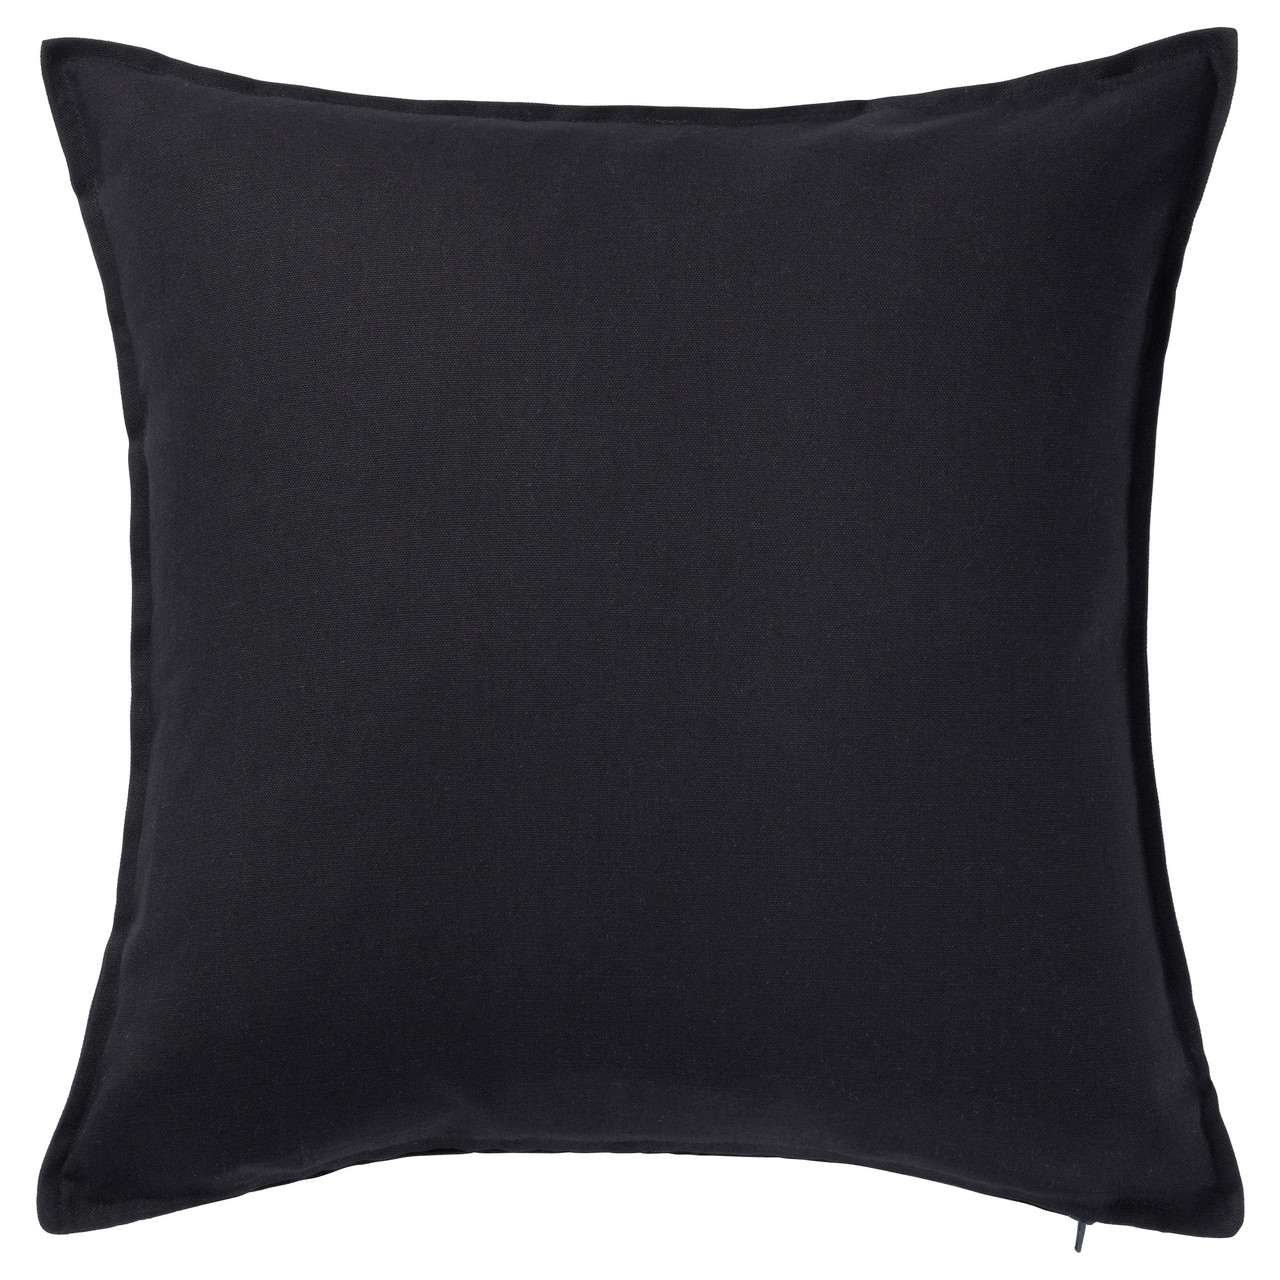 ГУРЛИ Наволочка на подушку, черный, 50x50 см 80281138 IKEA, ИКЕА, GURL